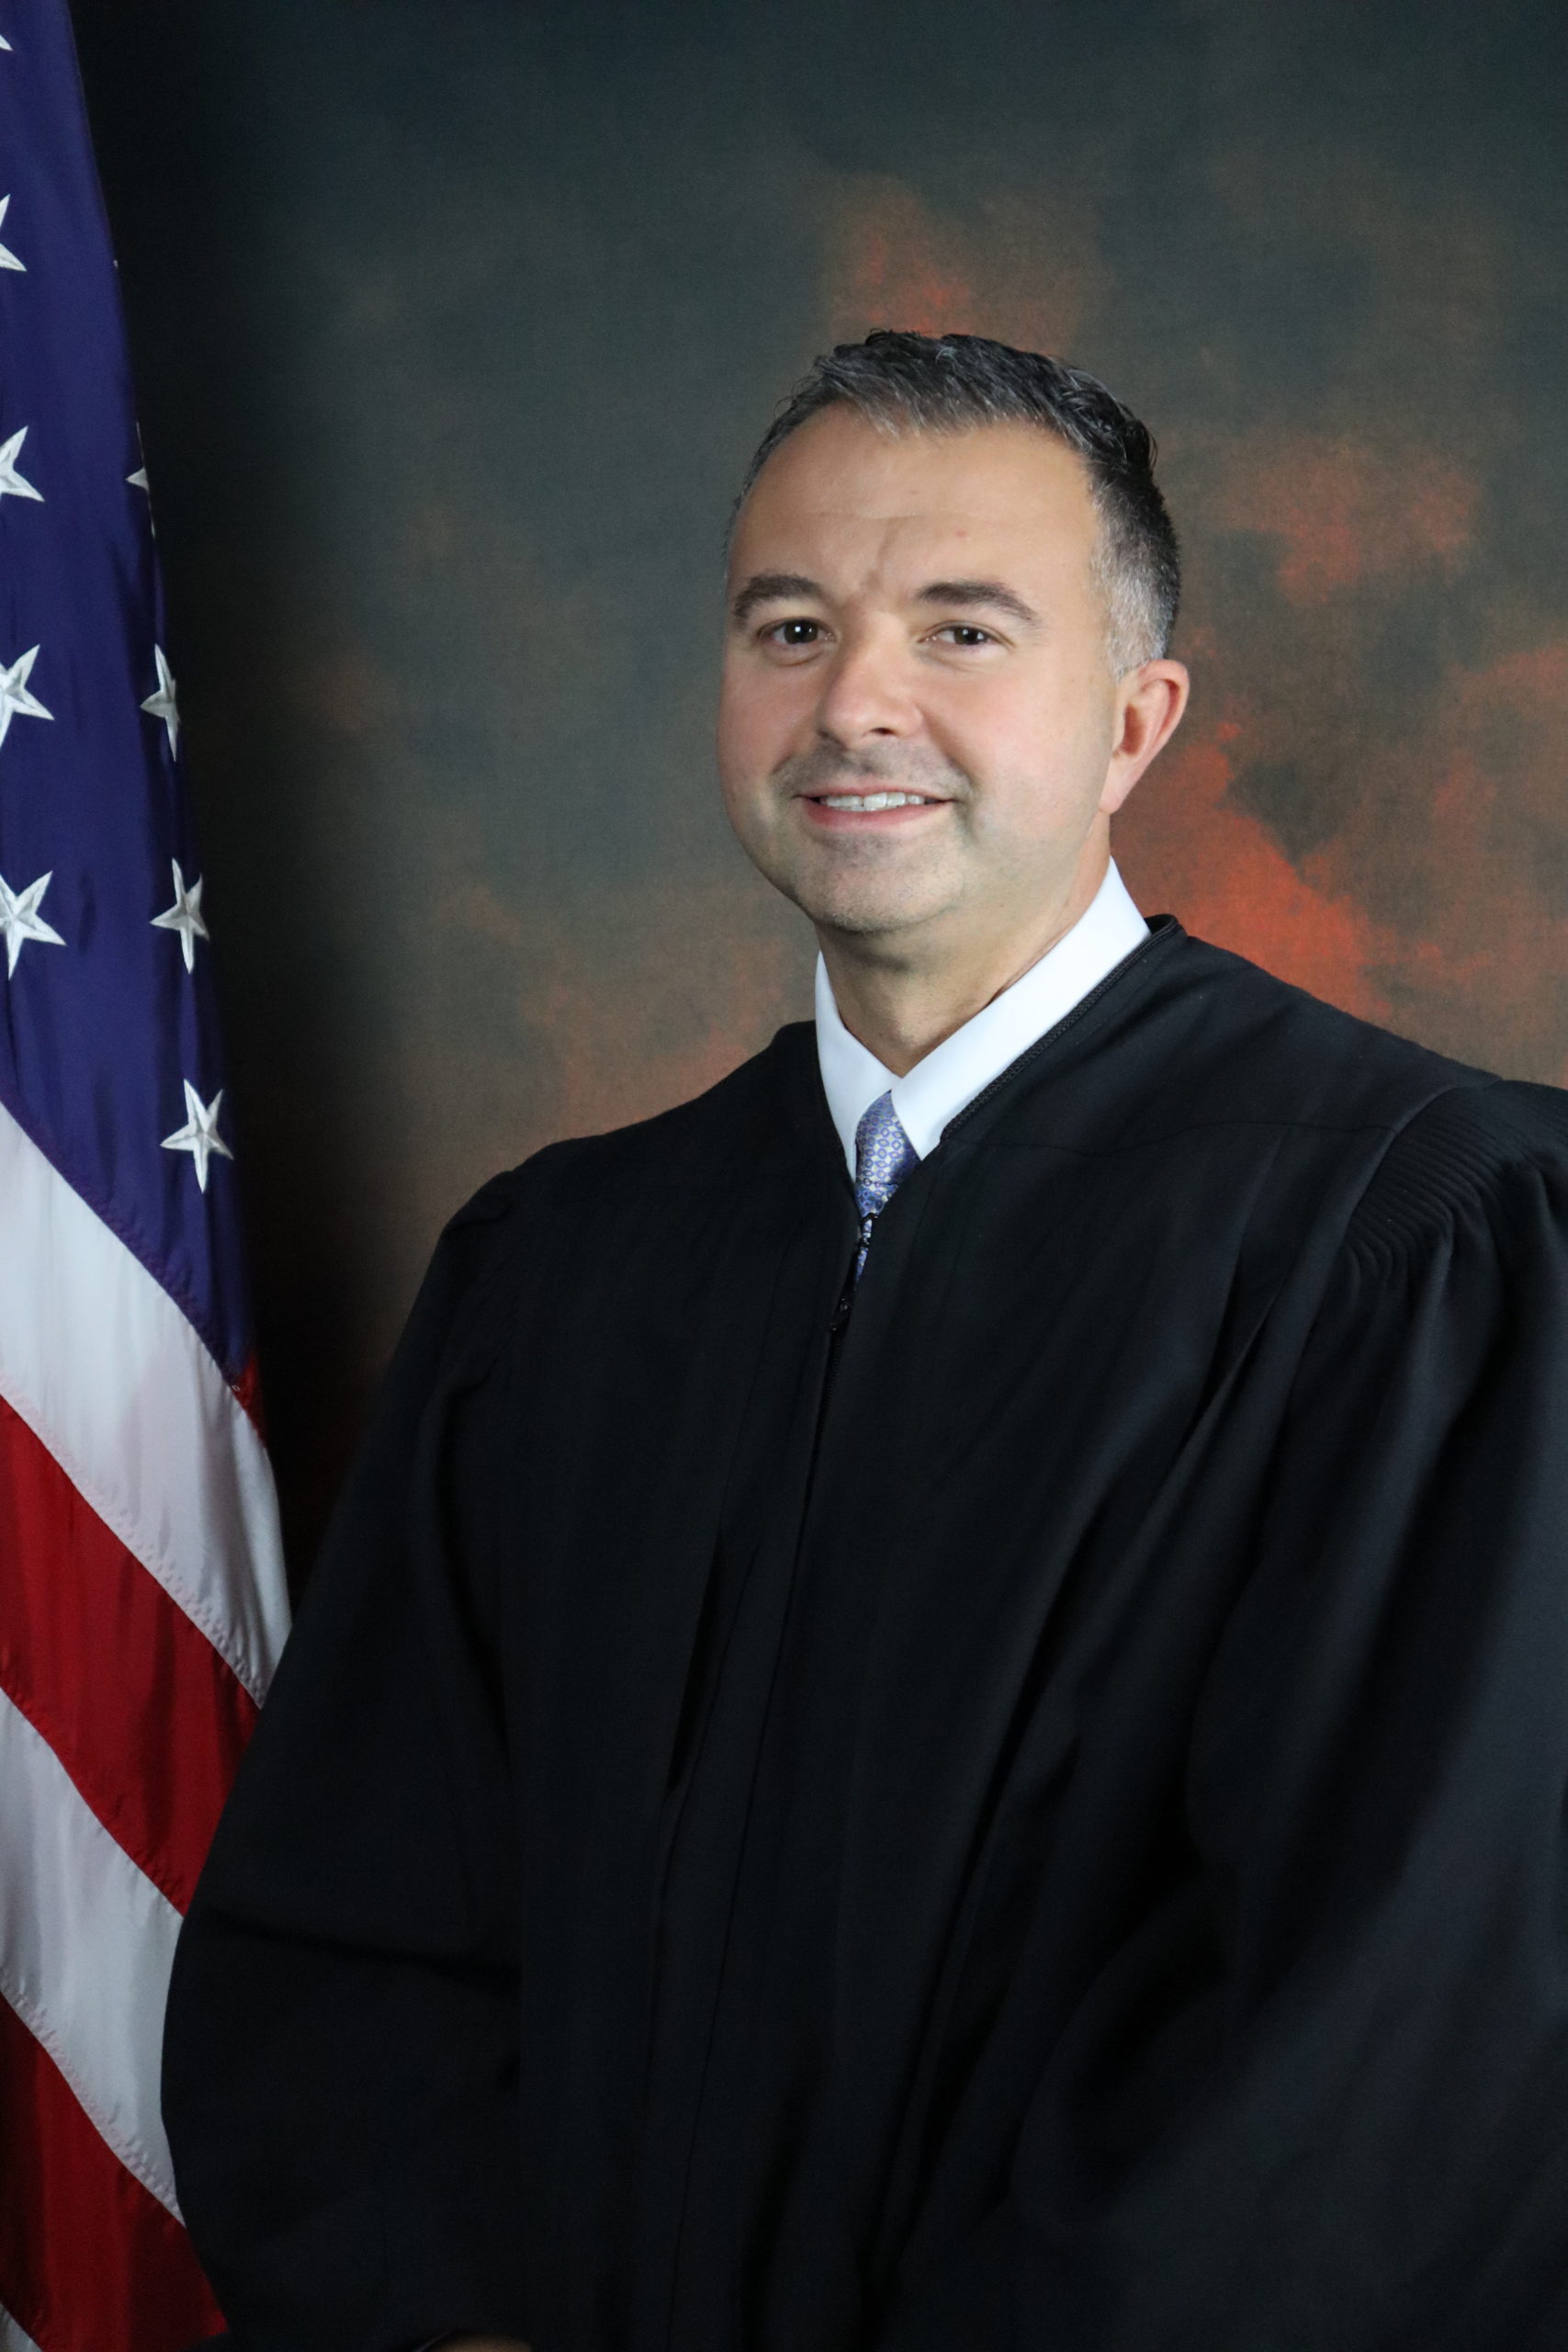 Judge Fritton